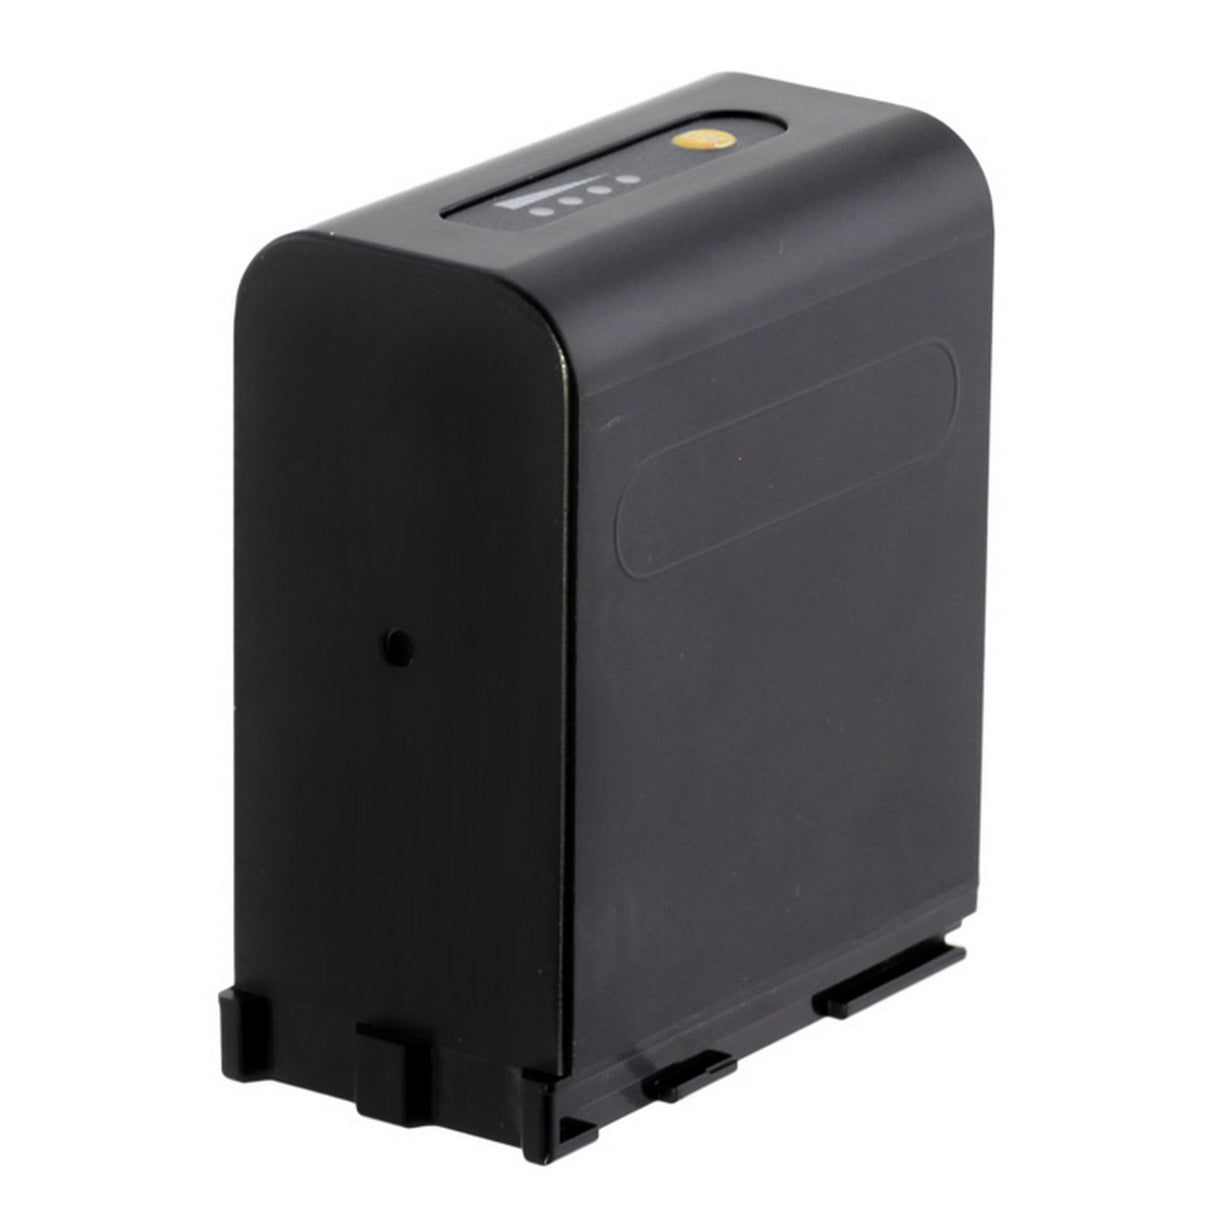 Ikan IBC-988 Ultra High Capacity Battery for Canon 900 Series